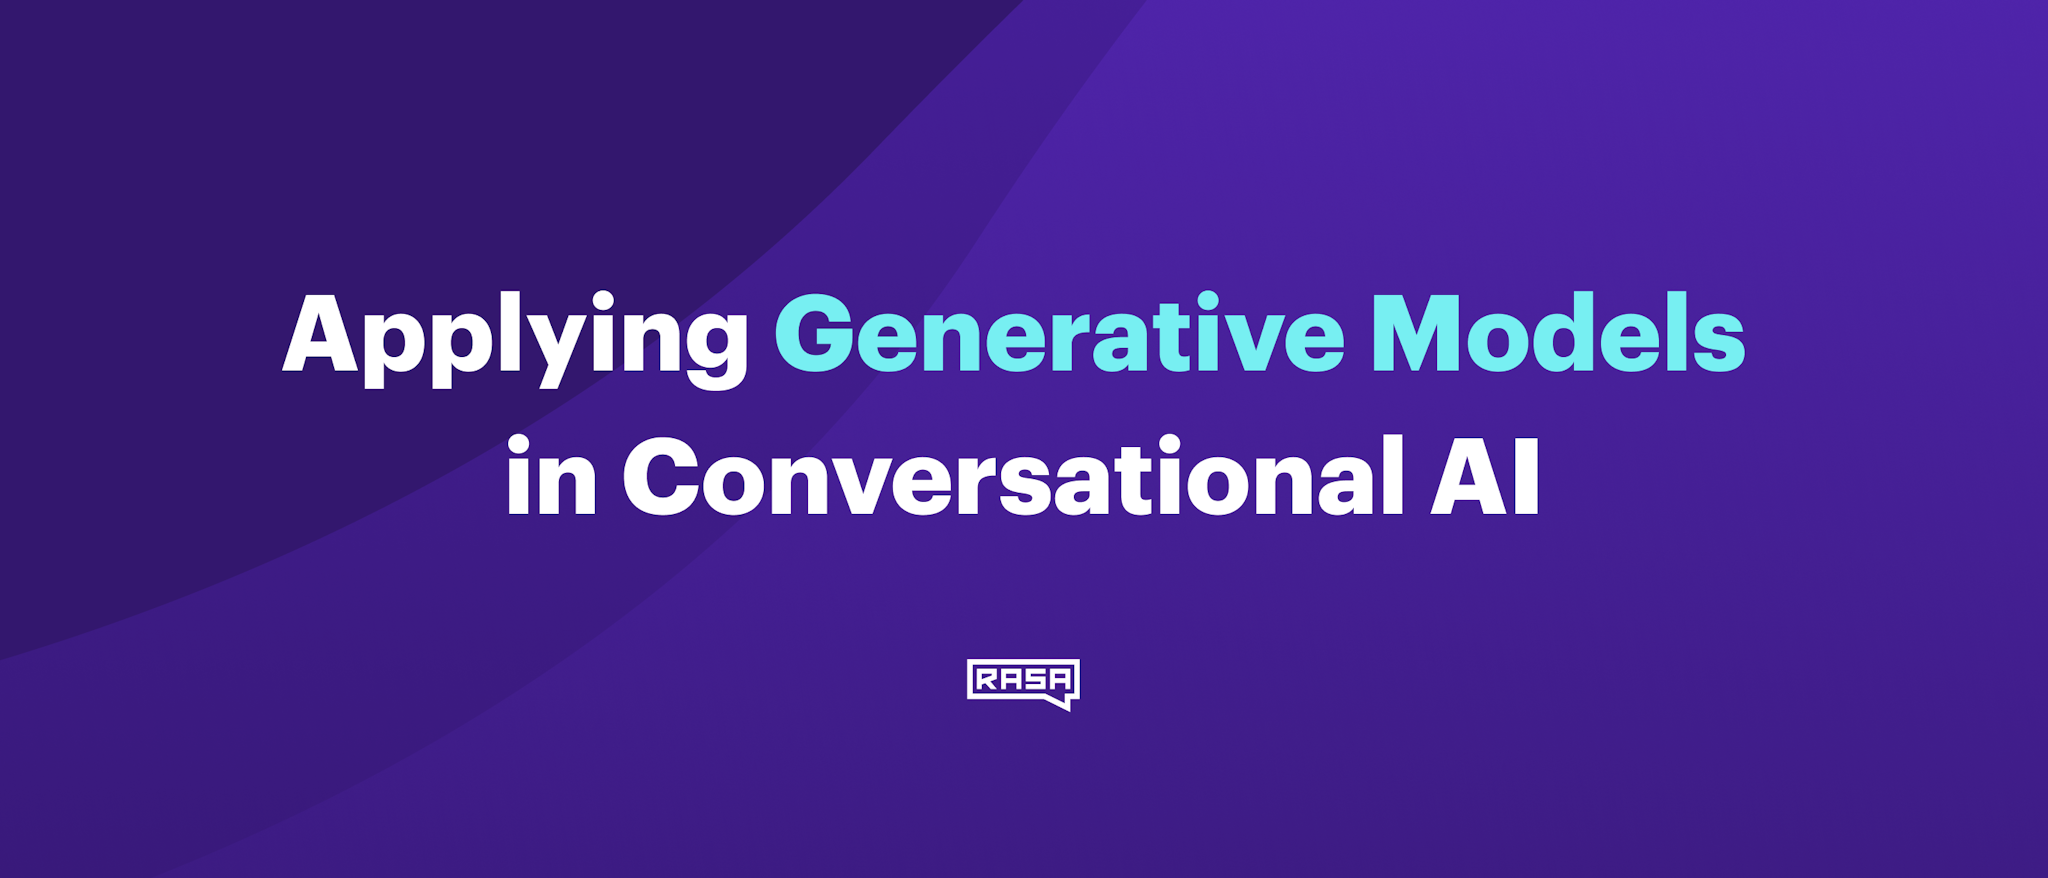 Applying Generative Models in Conversational AI